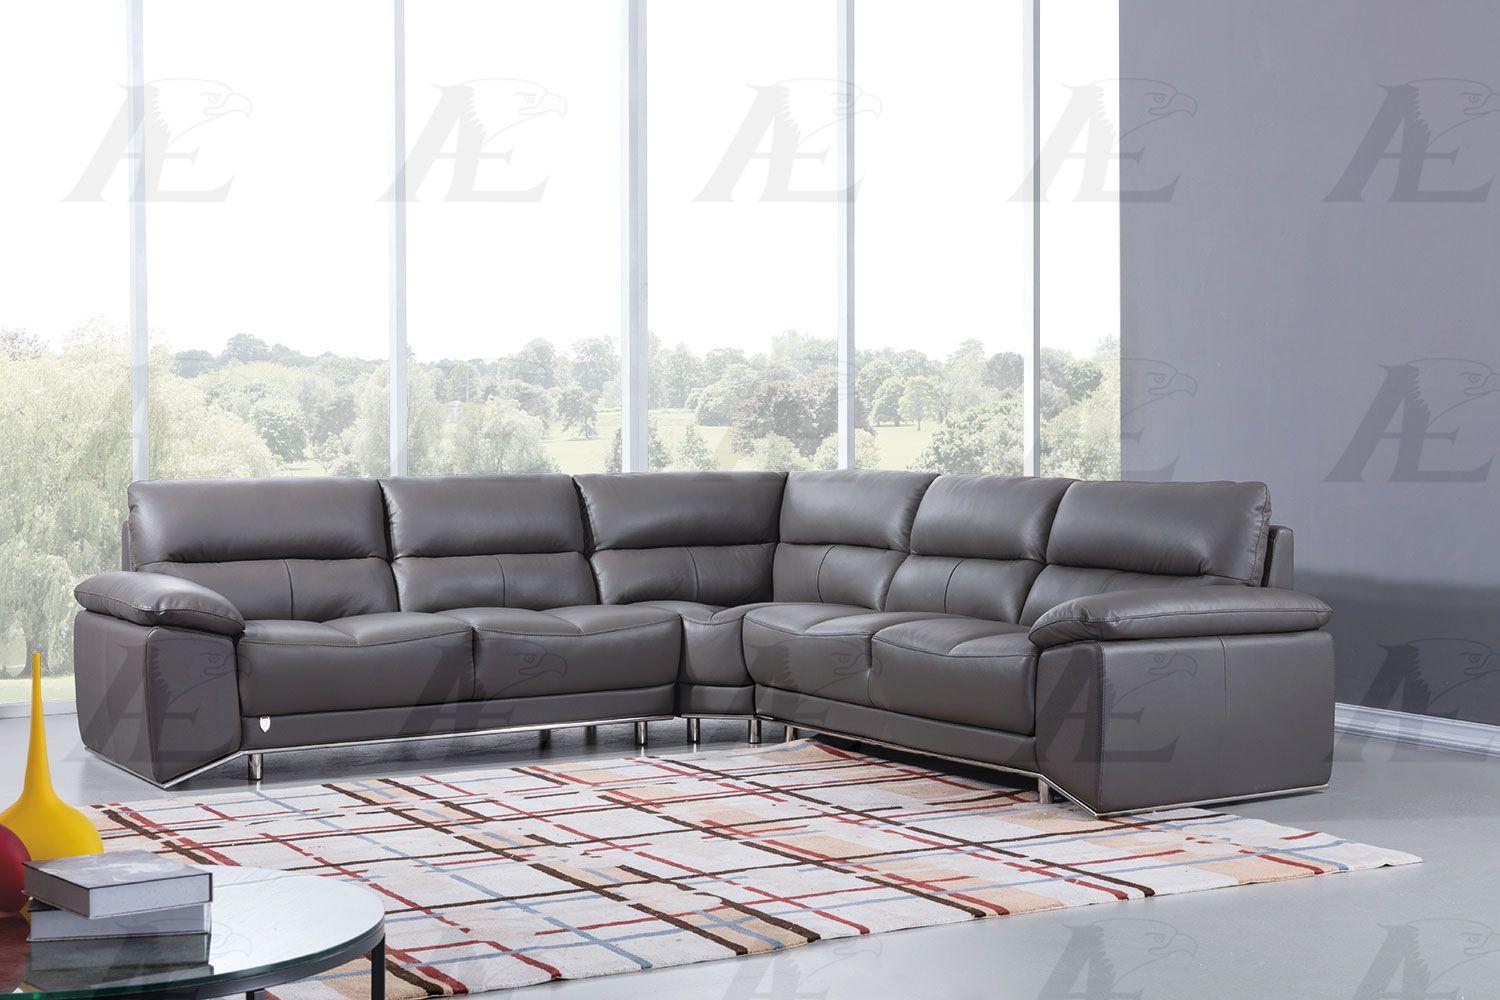 

    
EK-L8000M-DG American Eagle Furniture Sectional Sofa
